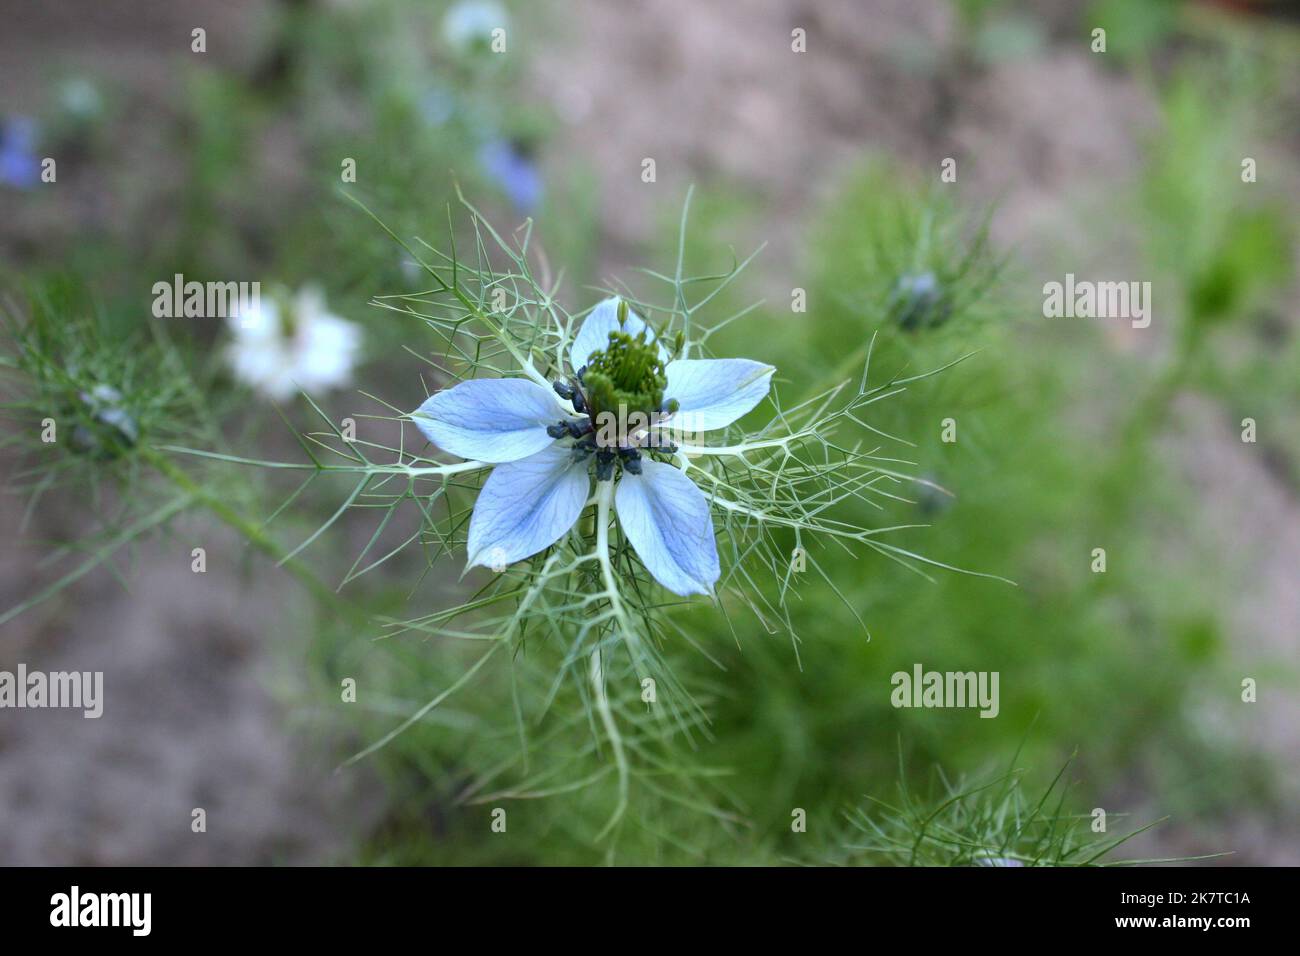 Bright blue flower of black caraway or black cumin or nigella or kalonji (Nigella sativa) close up Stock Photo